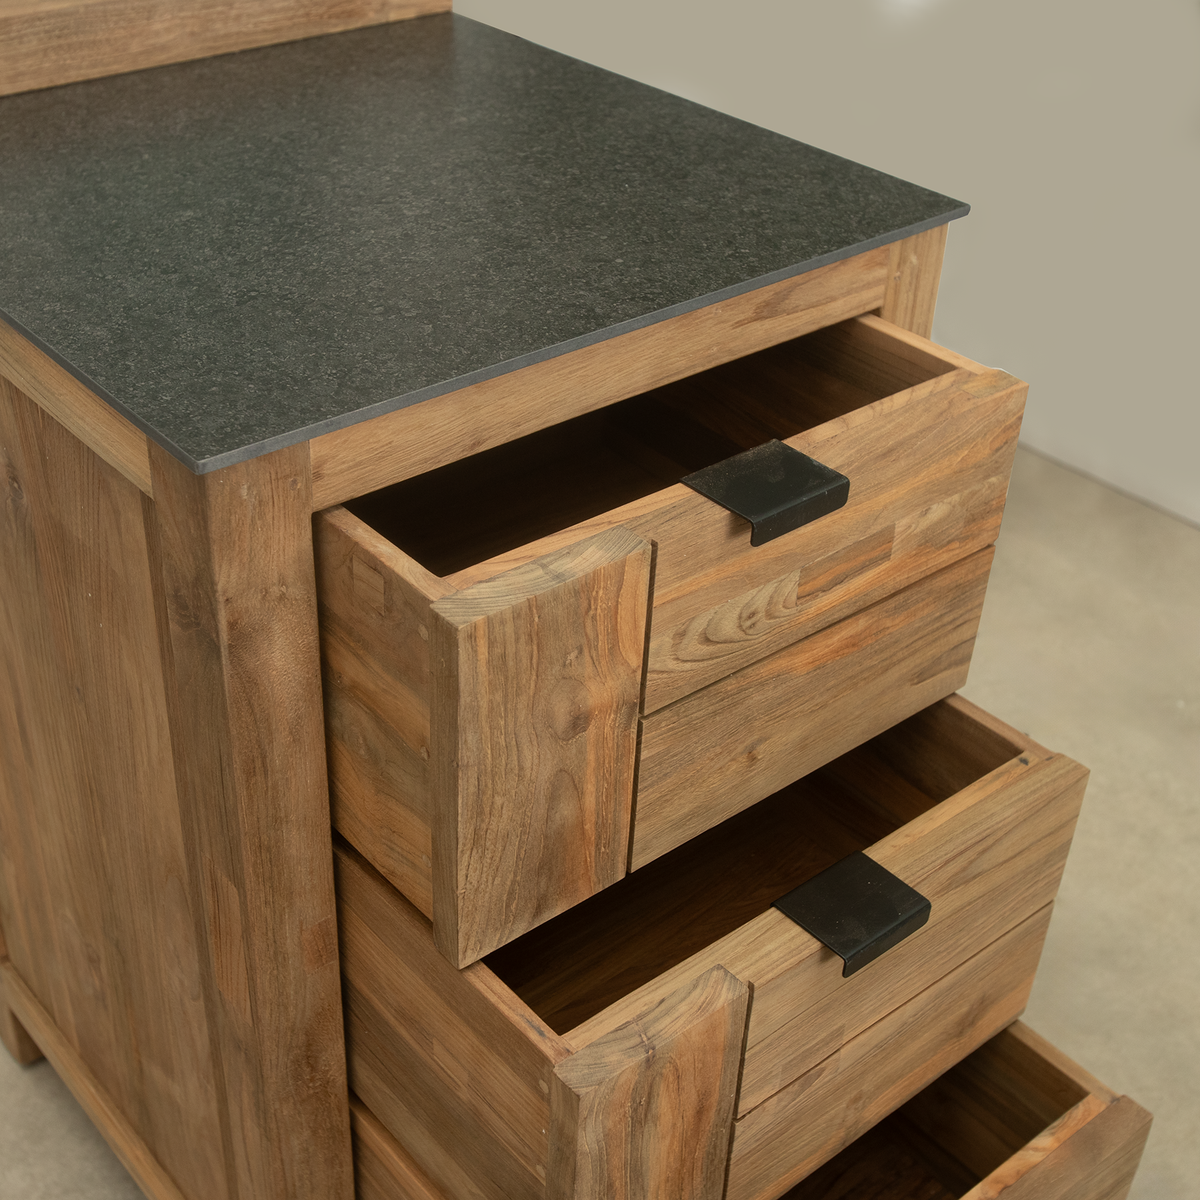 Draco Grills Teak Modular Outdoor Kitchen 3 Drawer Cabinet with Ceramic Top